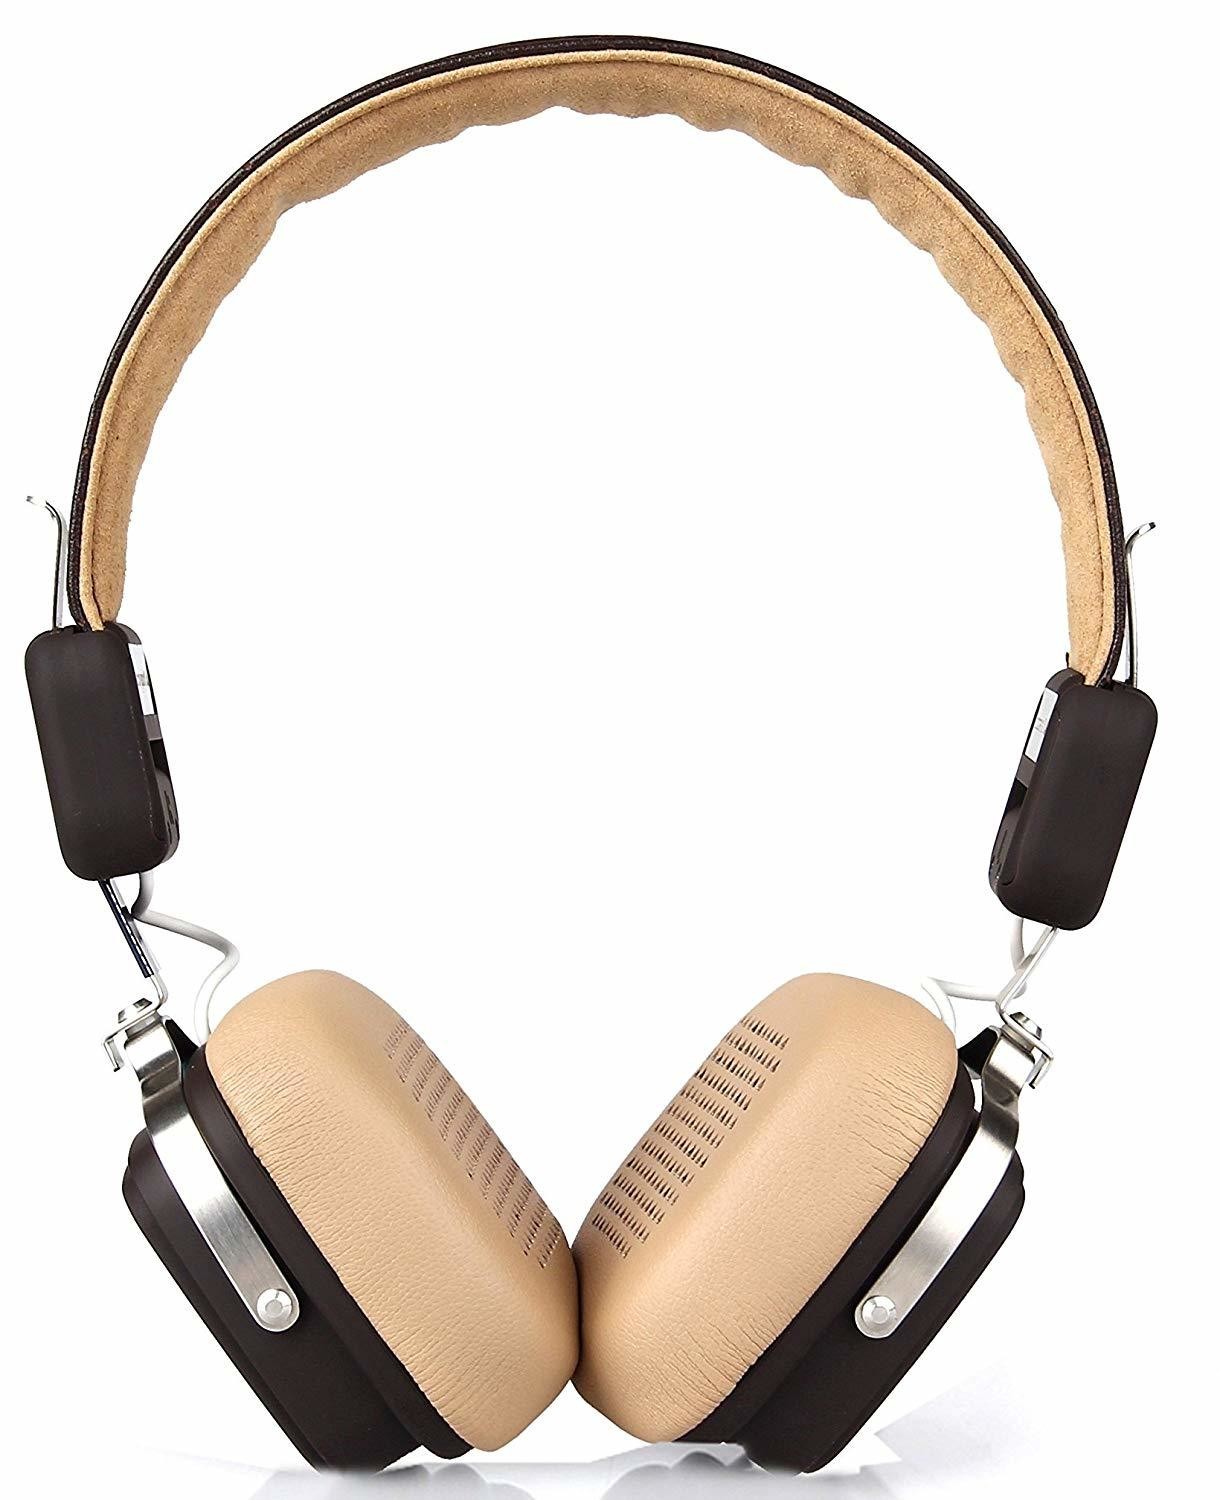 boat rockerz 600 over ear wireless headphones-brown, rs